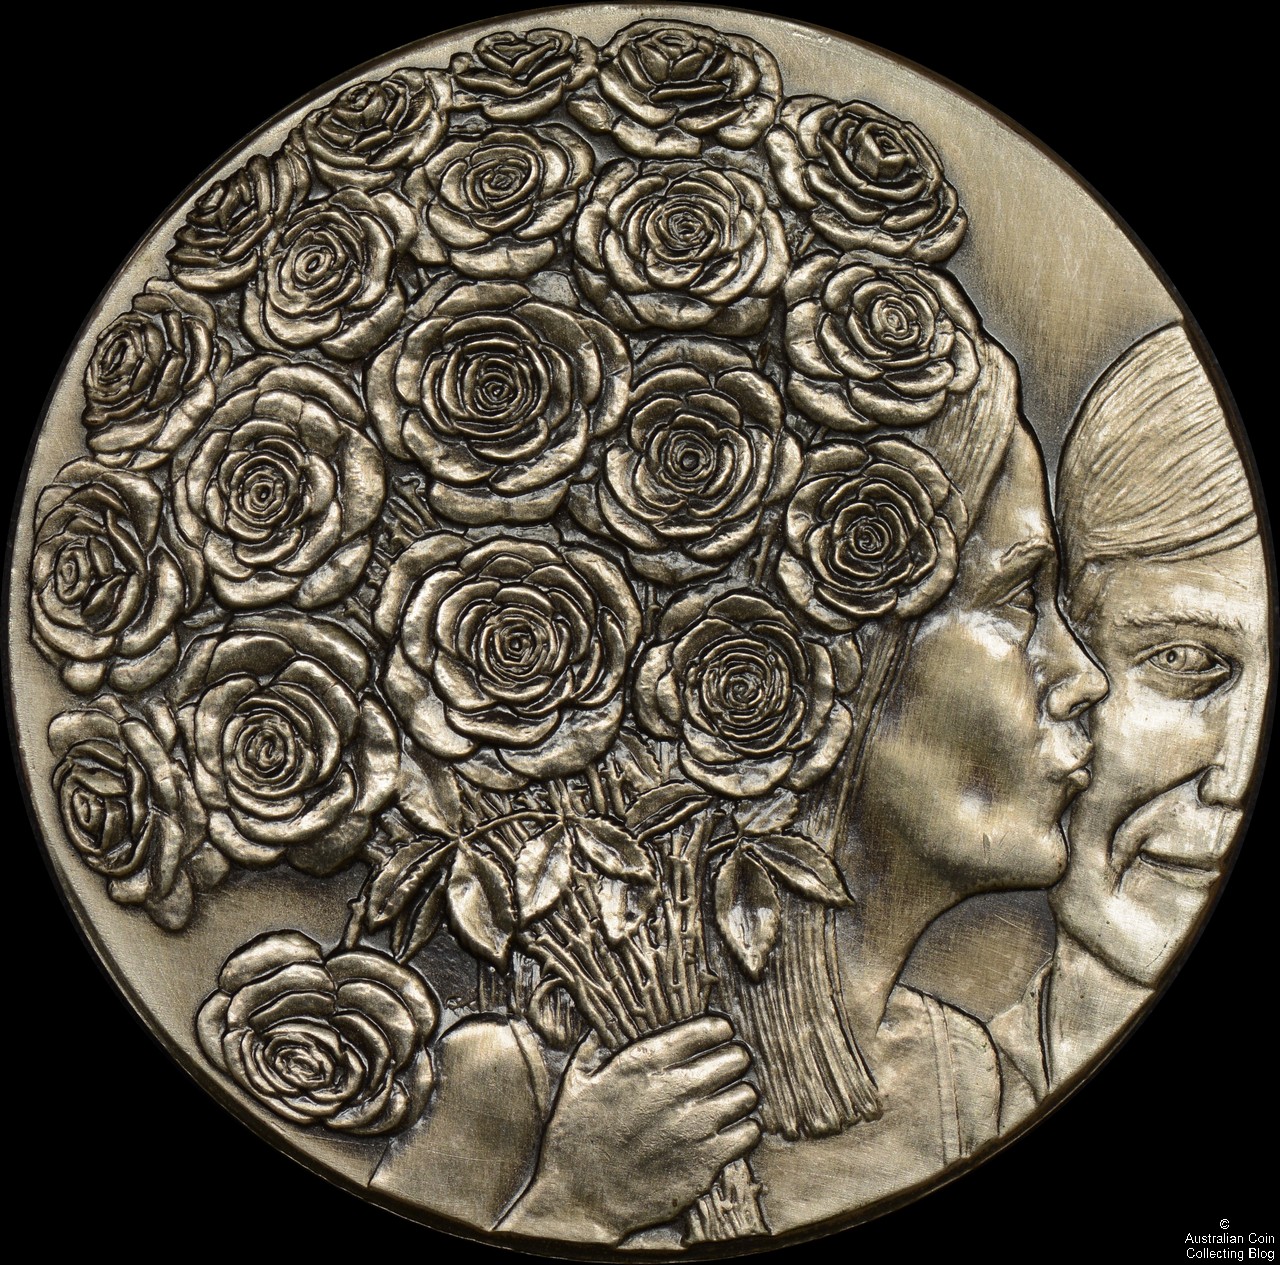 Australia 1990 “Courtship” Art Medal Series by Michael Meszaros